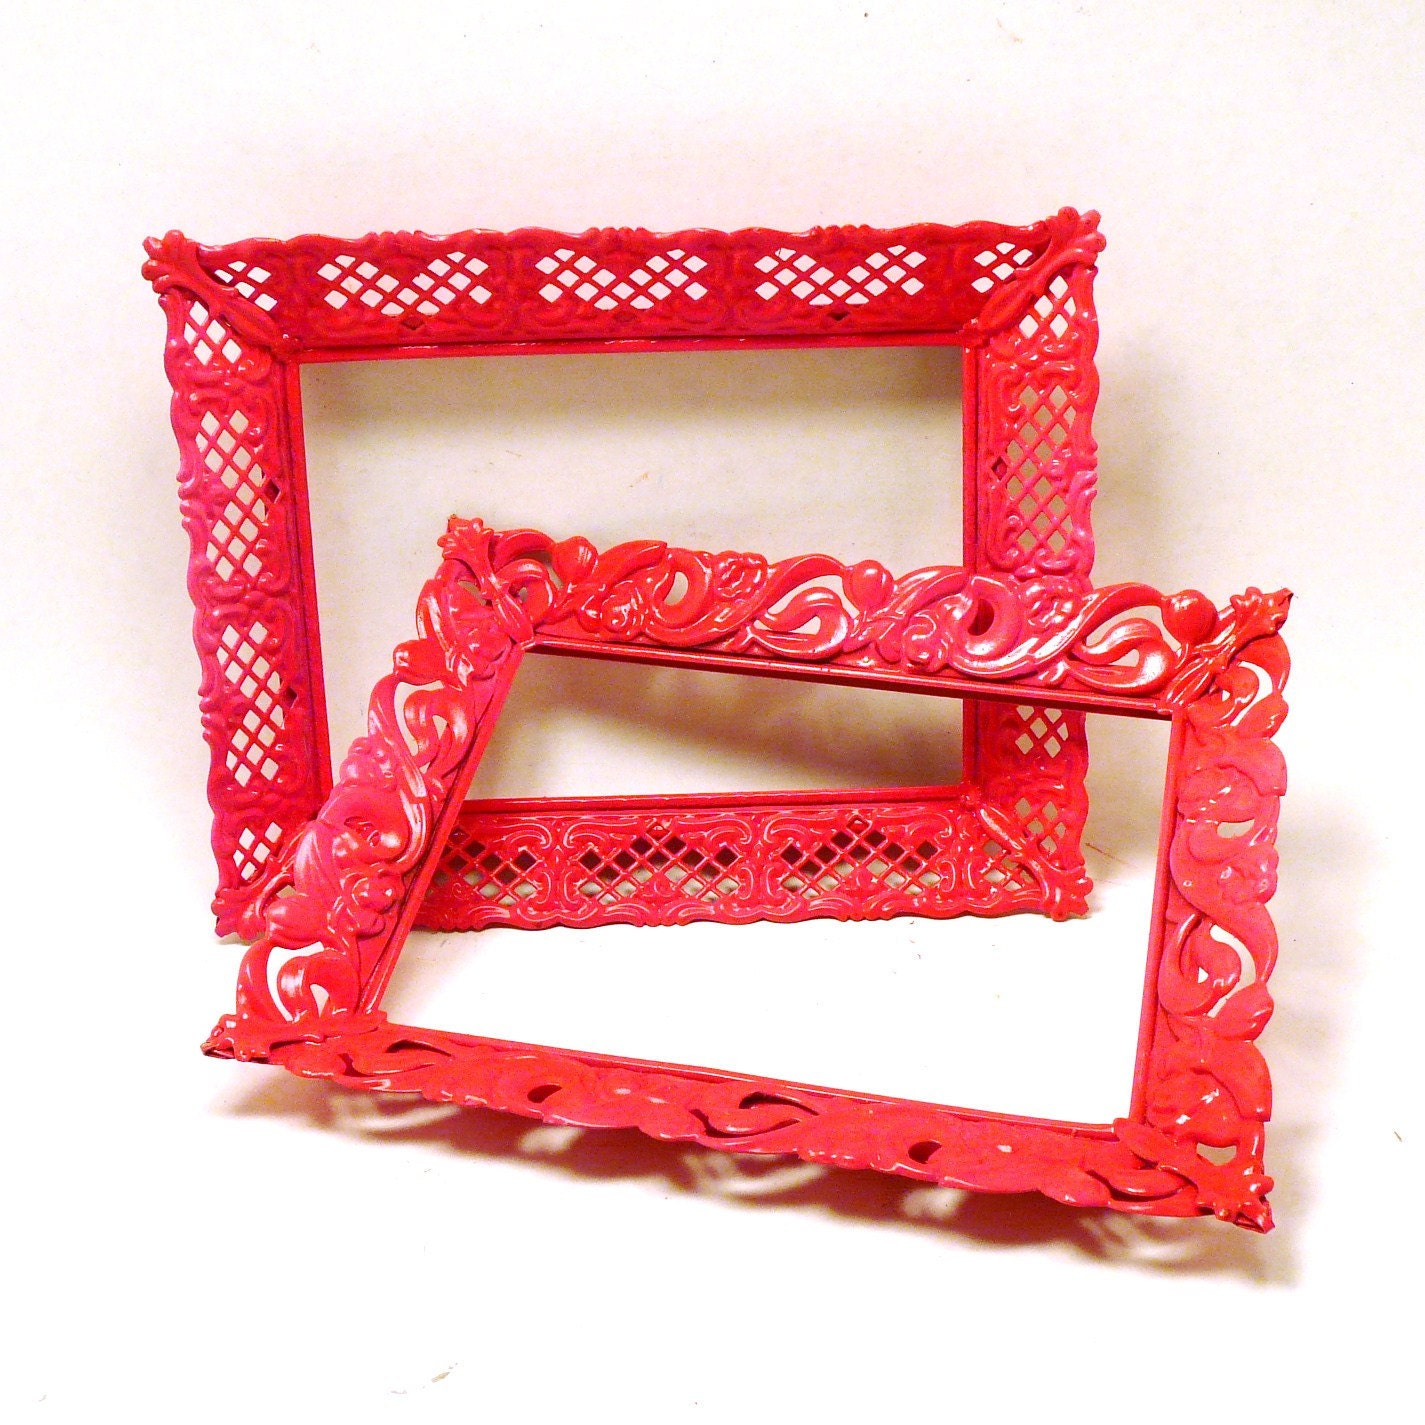 upcycled frames  //  vintage kitsch, neon pink decor, ornate picture frame metal, victorian, summer trends, raspberry - nashpop